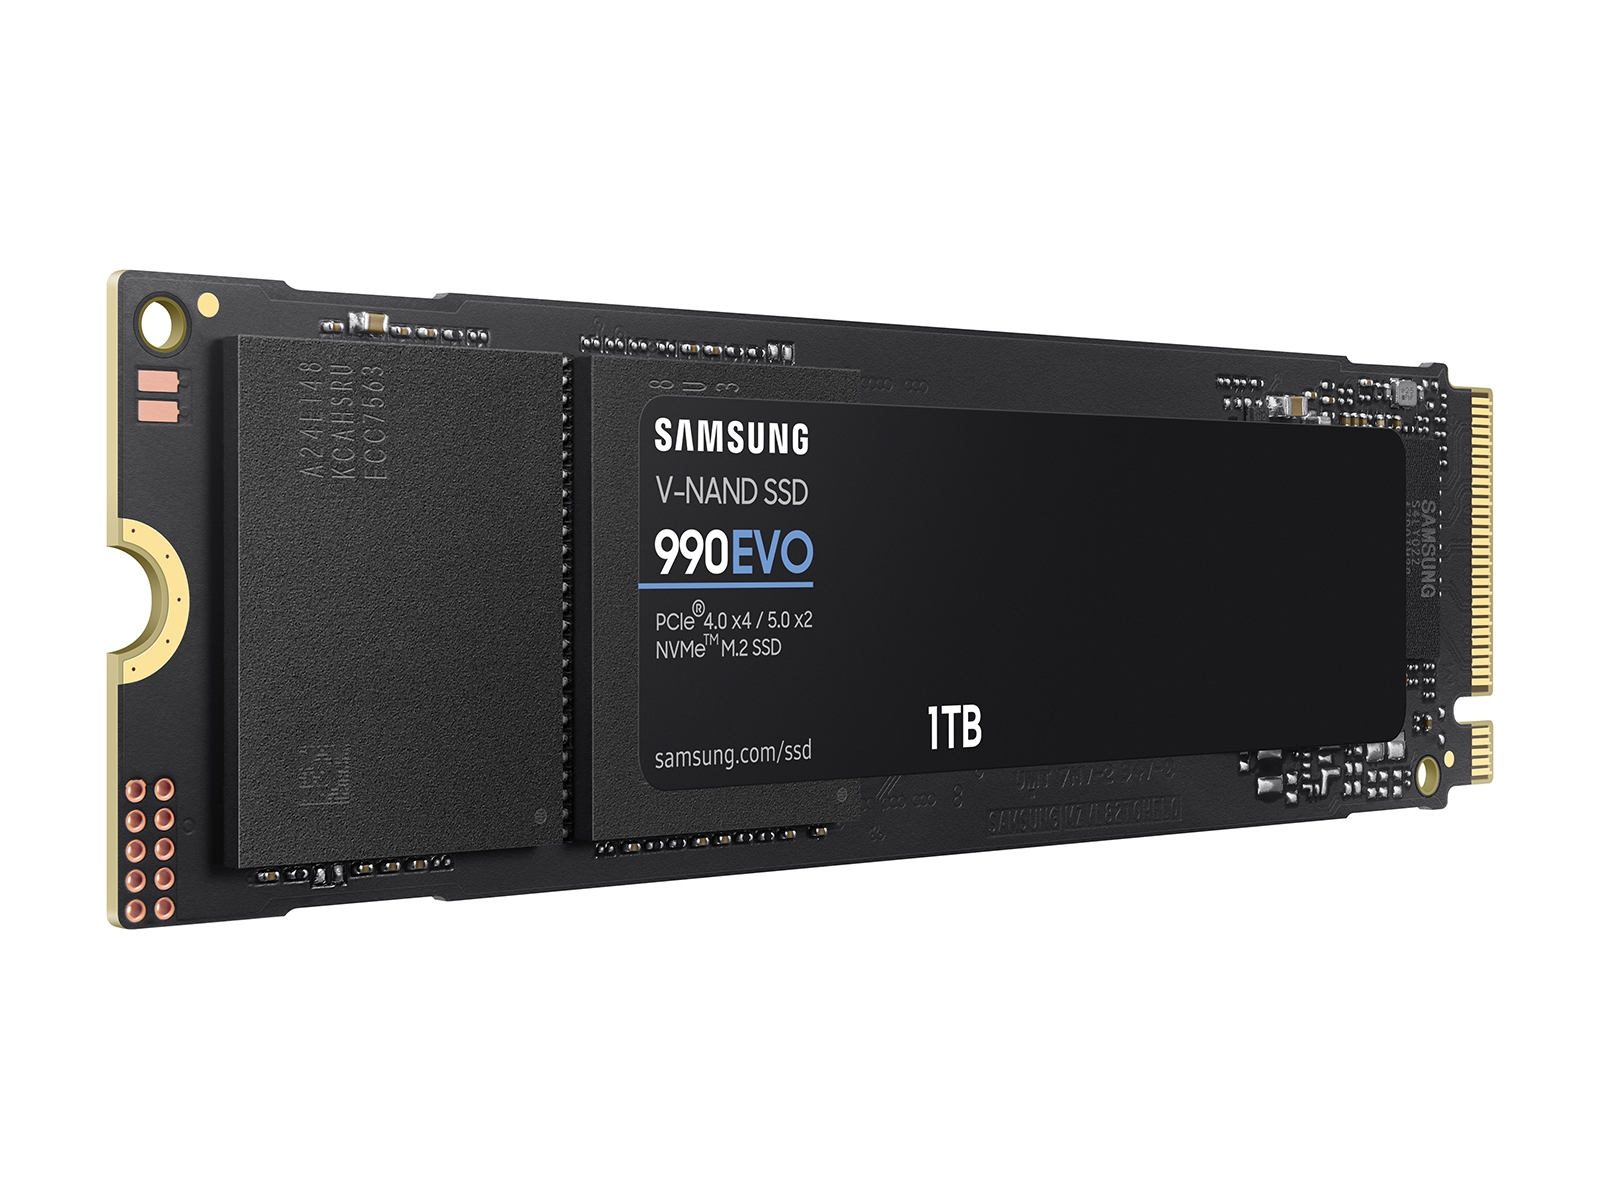 Buy 980 NVMe M.2 250GB-1TB SSD, MZ-V8V1T0BW